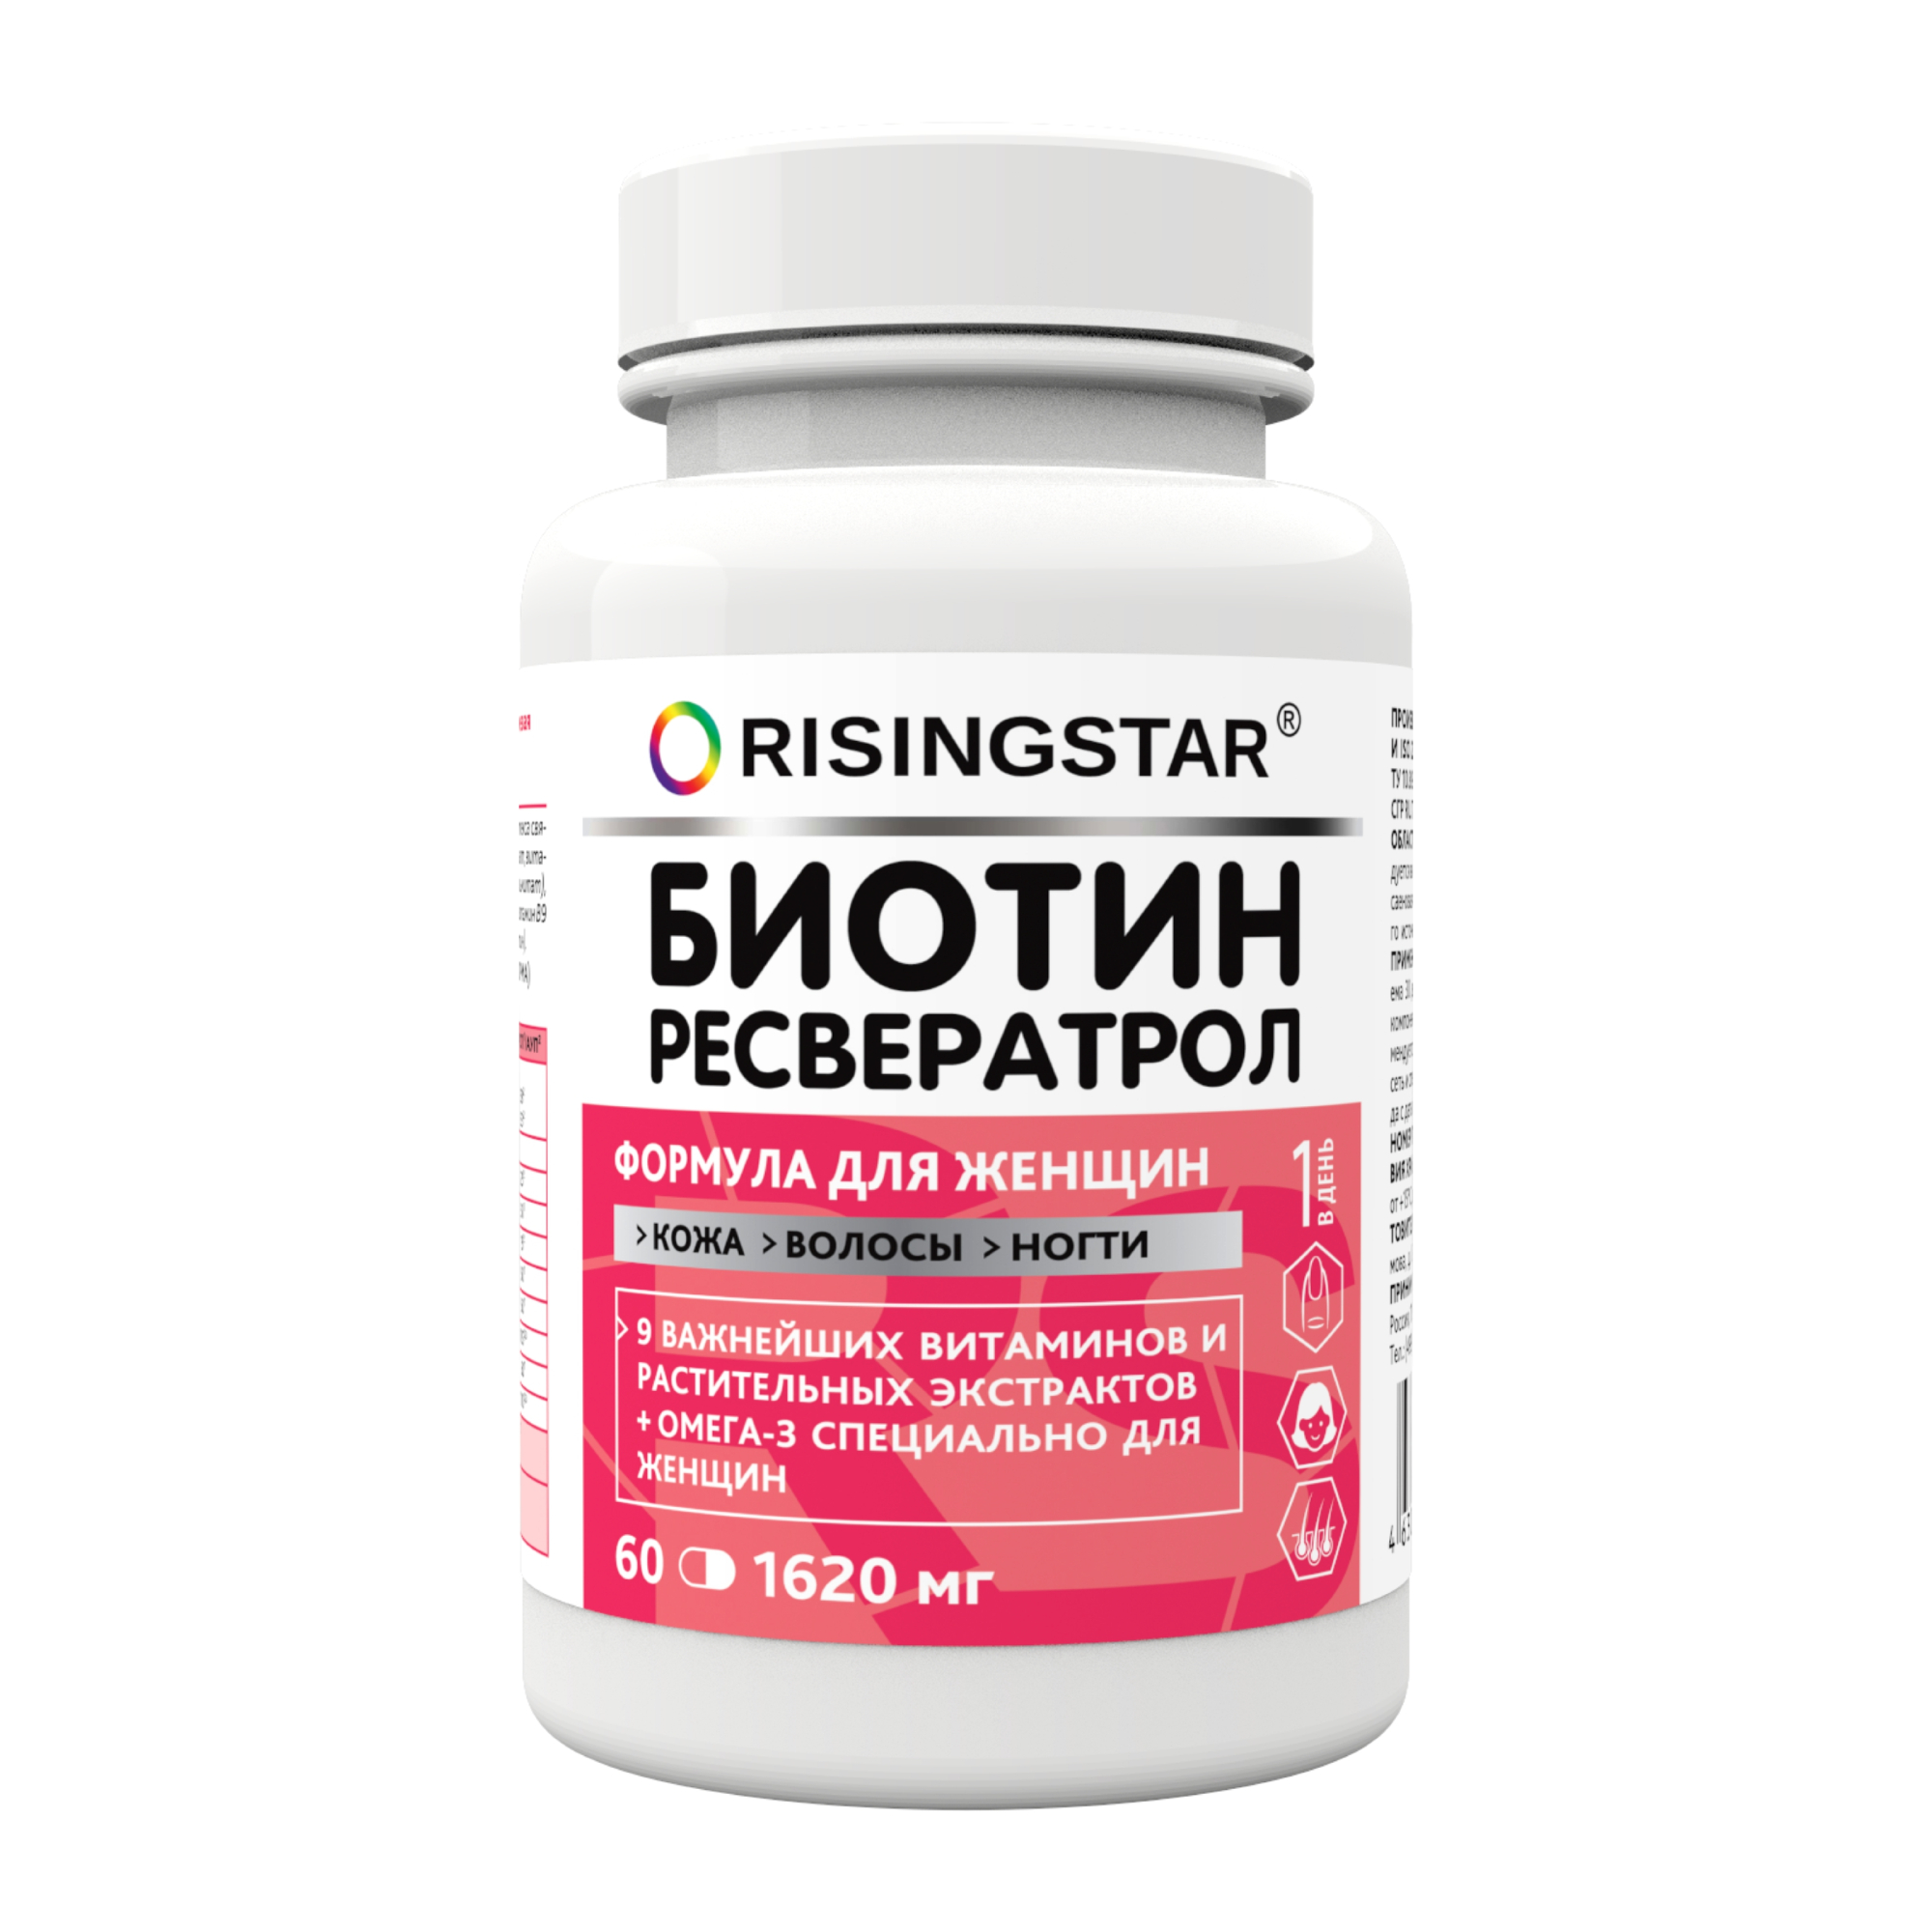 БАД Risingstar биотин+фолиевая кислота с омега-3 для женщин 60 таблеток, 100 г бад risingstar комплекс витаминов адаптогены с омега 3 60 таблеток 100 г